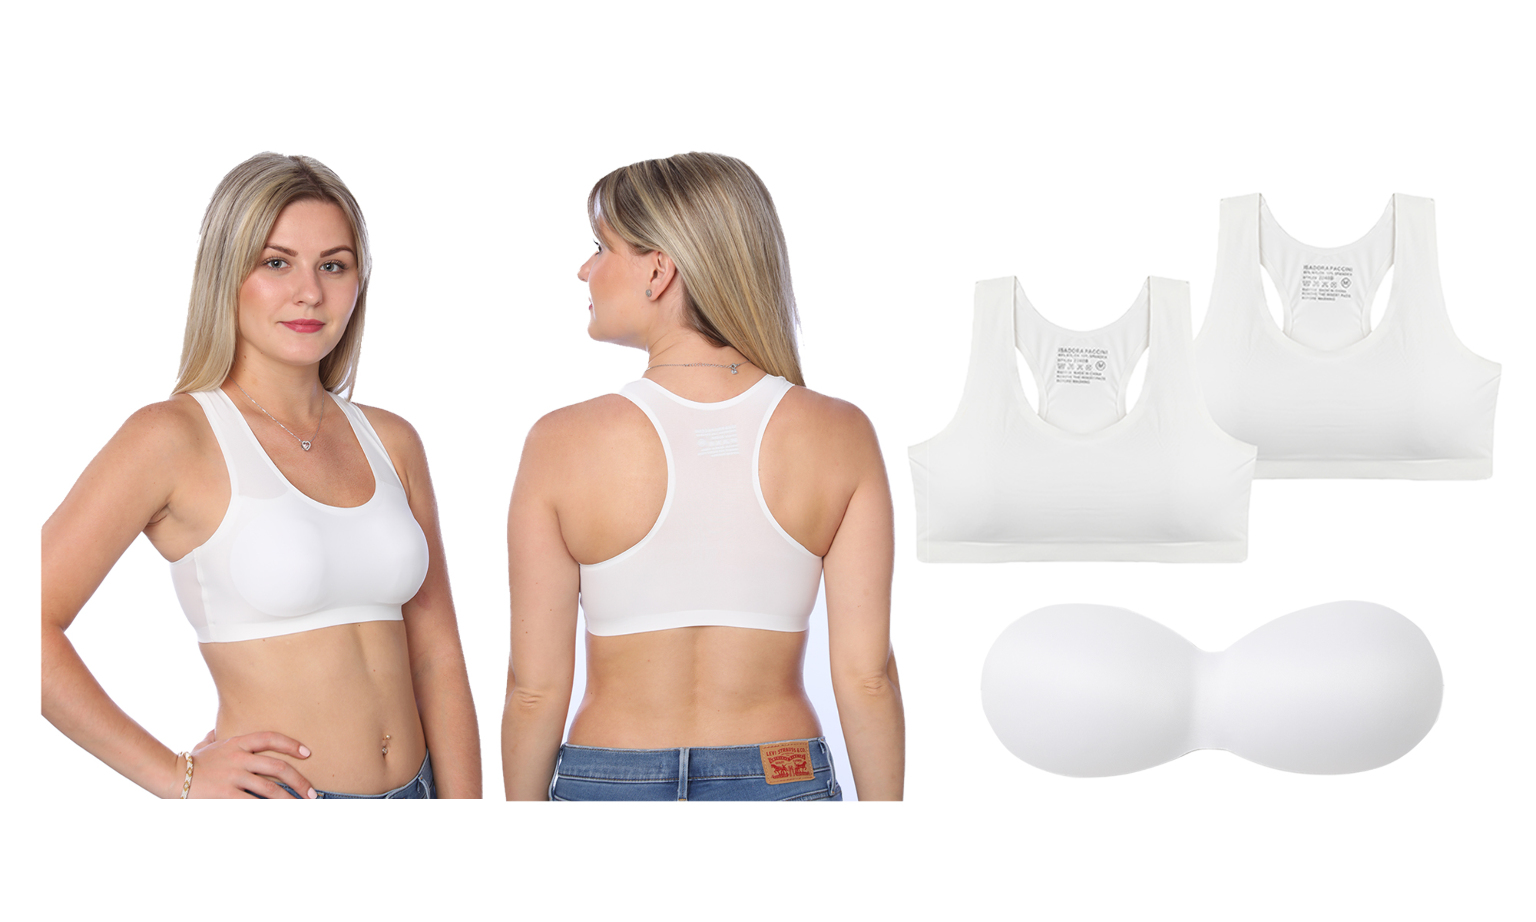 Wholesale Women's Sports Bras in White - DollarDays